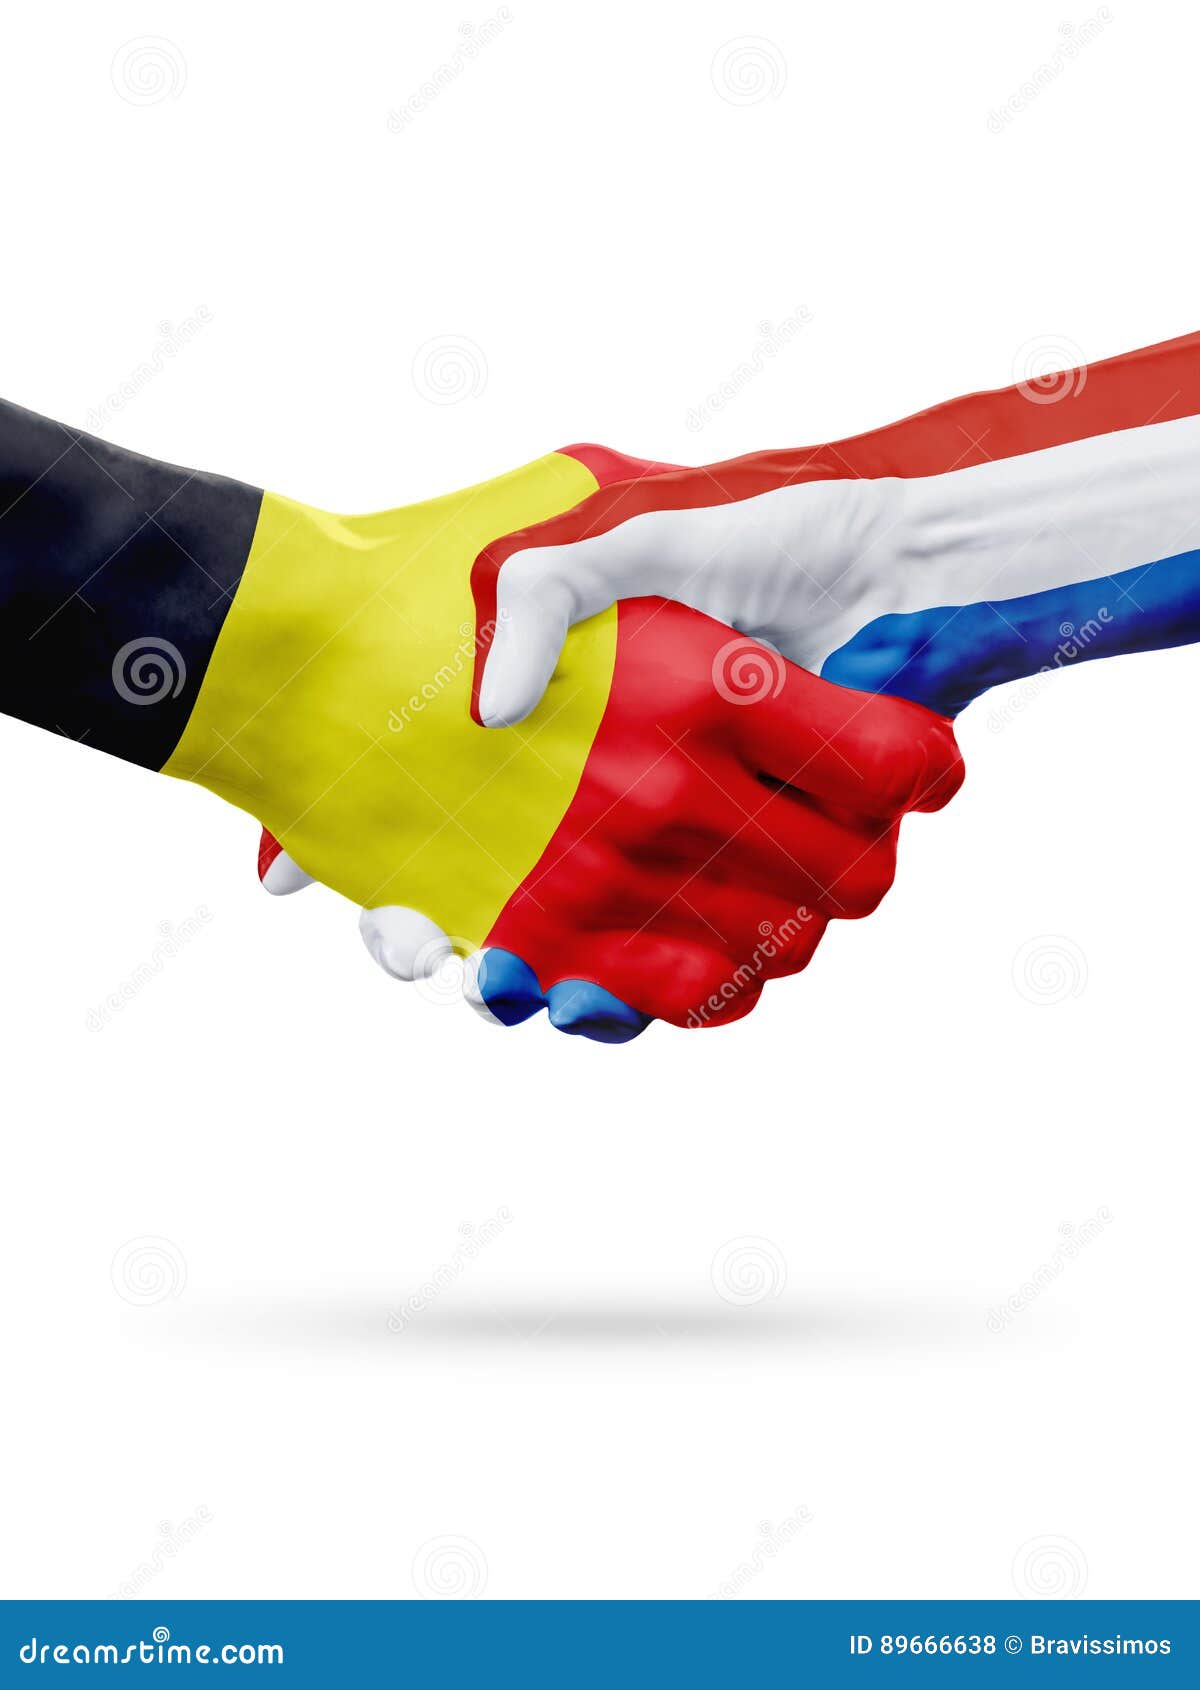 Countries, Partnership Friendship Handshake Concept. Stock Photo - Image of idea, agree: 89666638